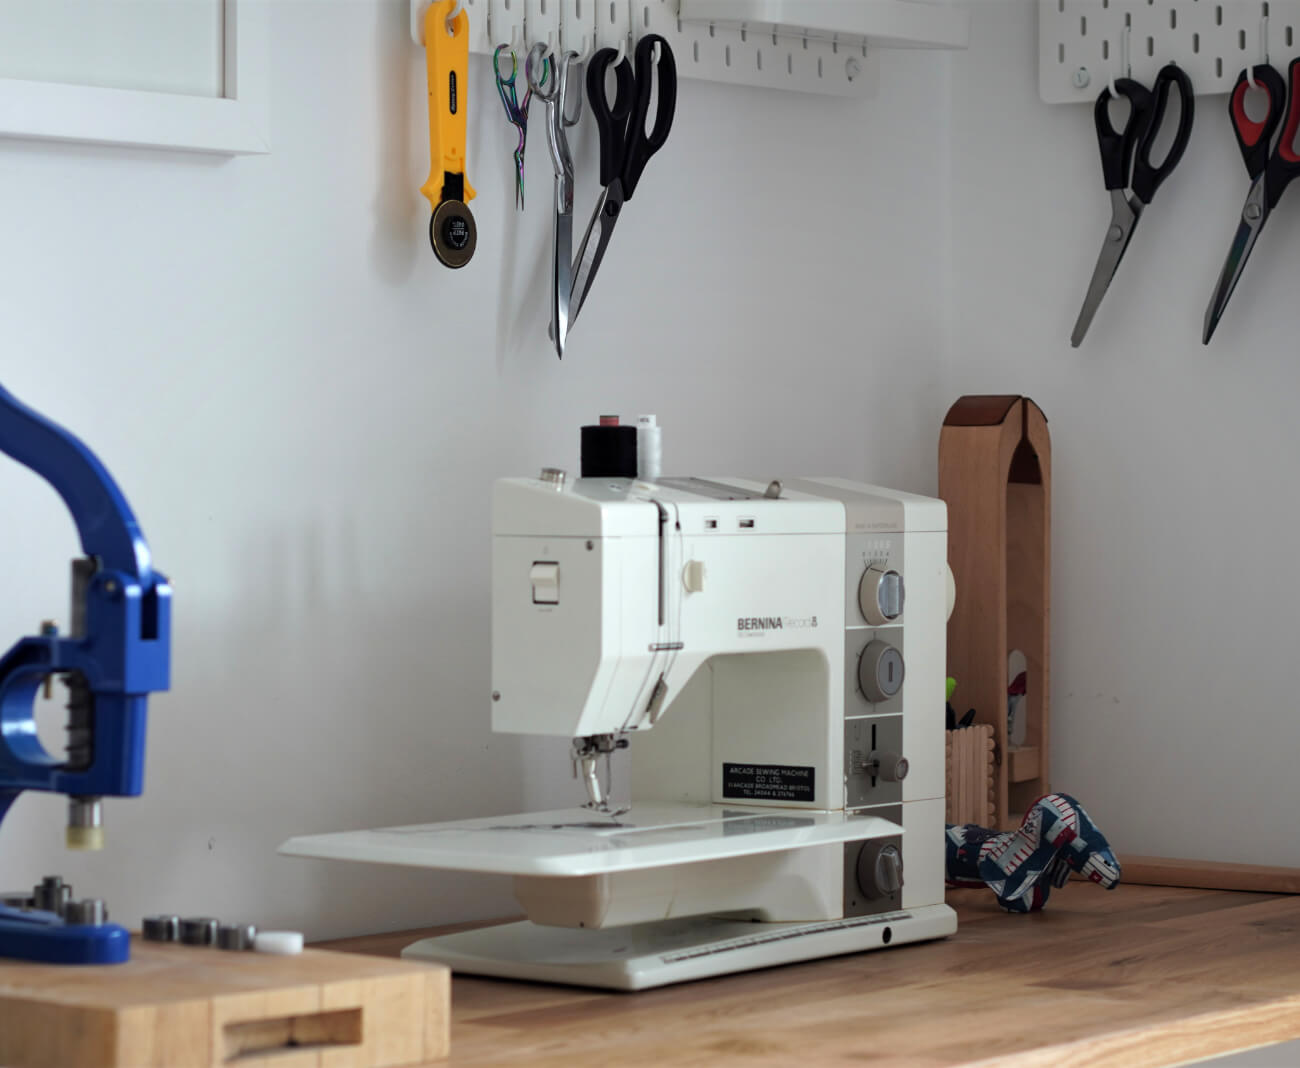 Bernina Record 930 Sewing Machine